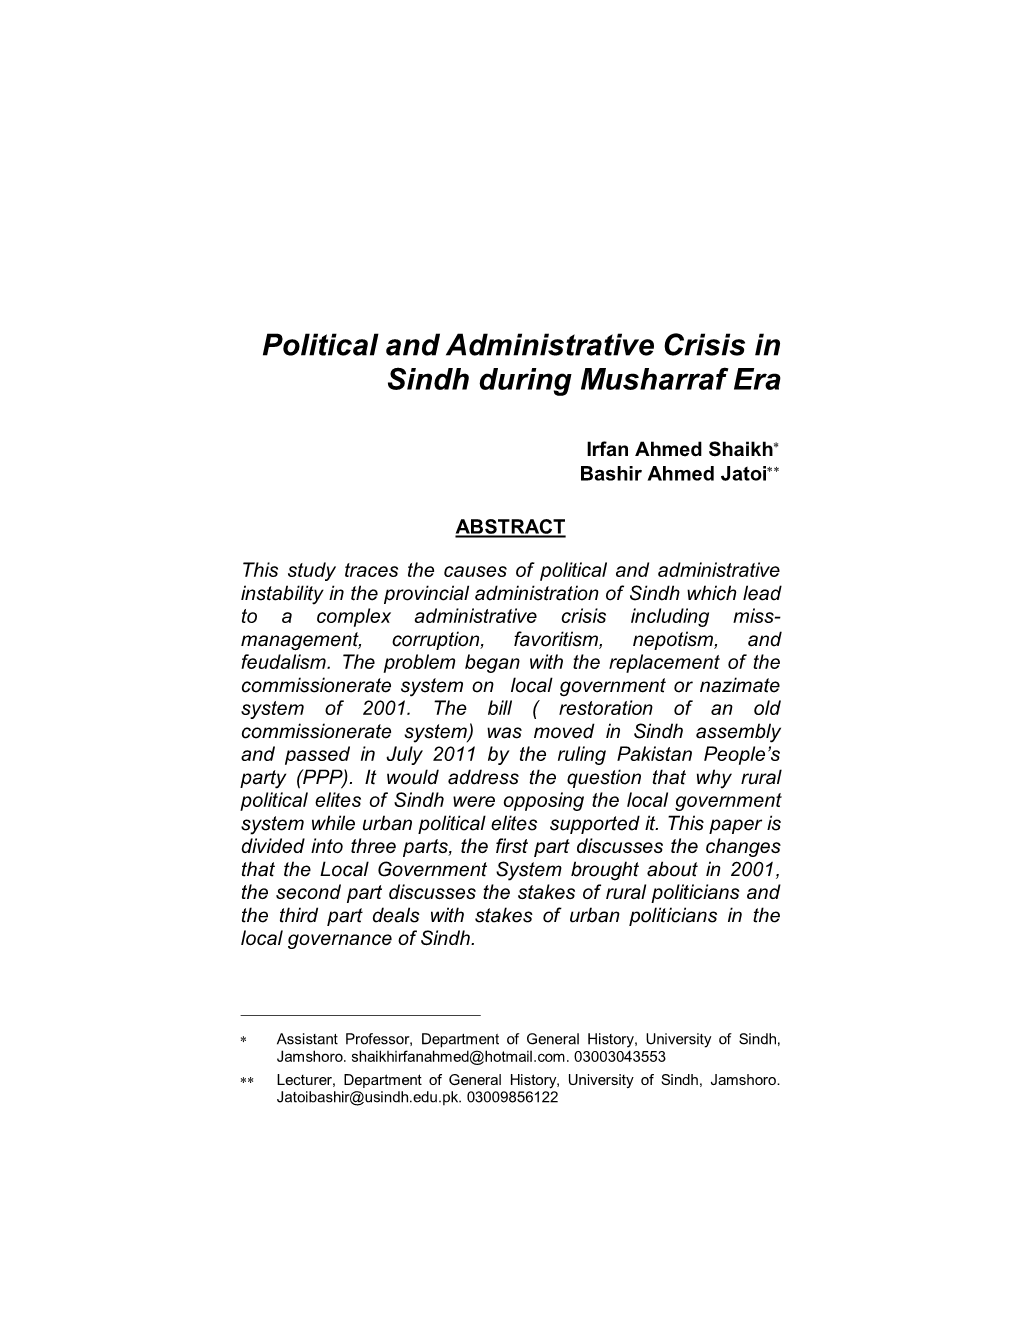 Political and Administrative Crisis in Sindh During Musharraf Era